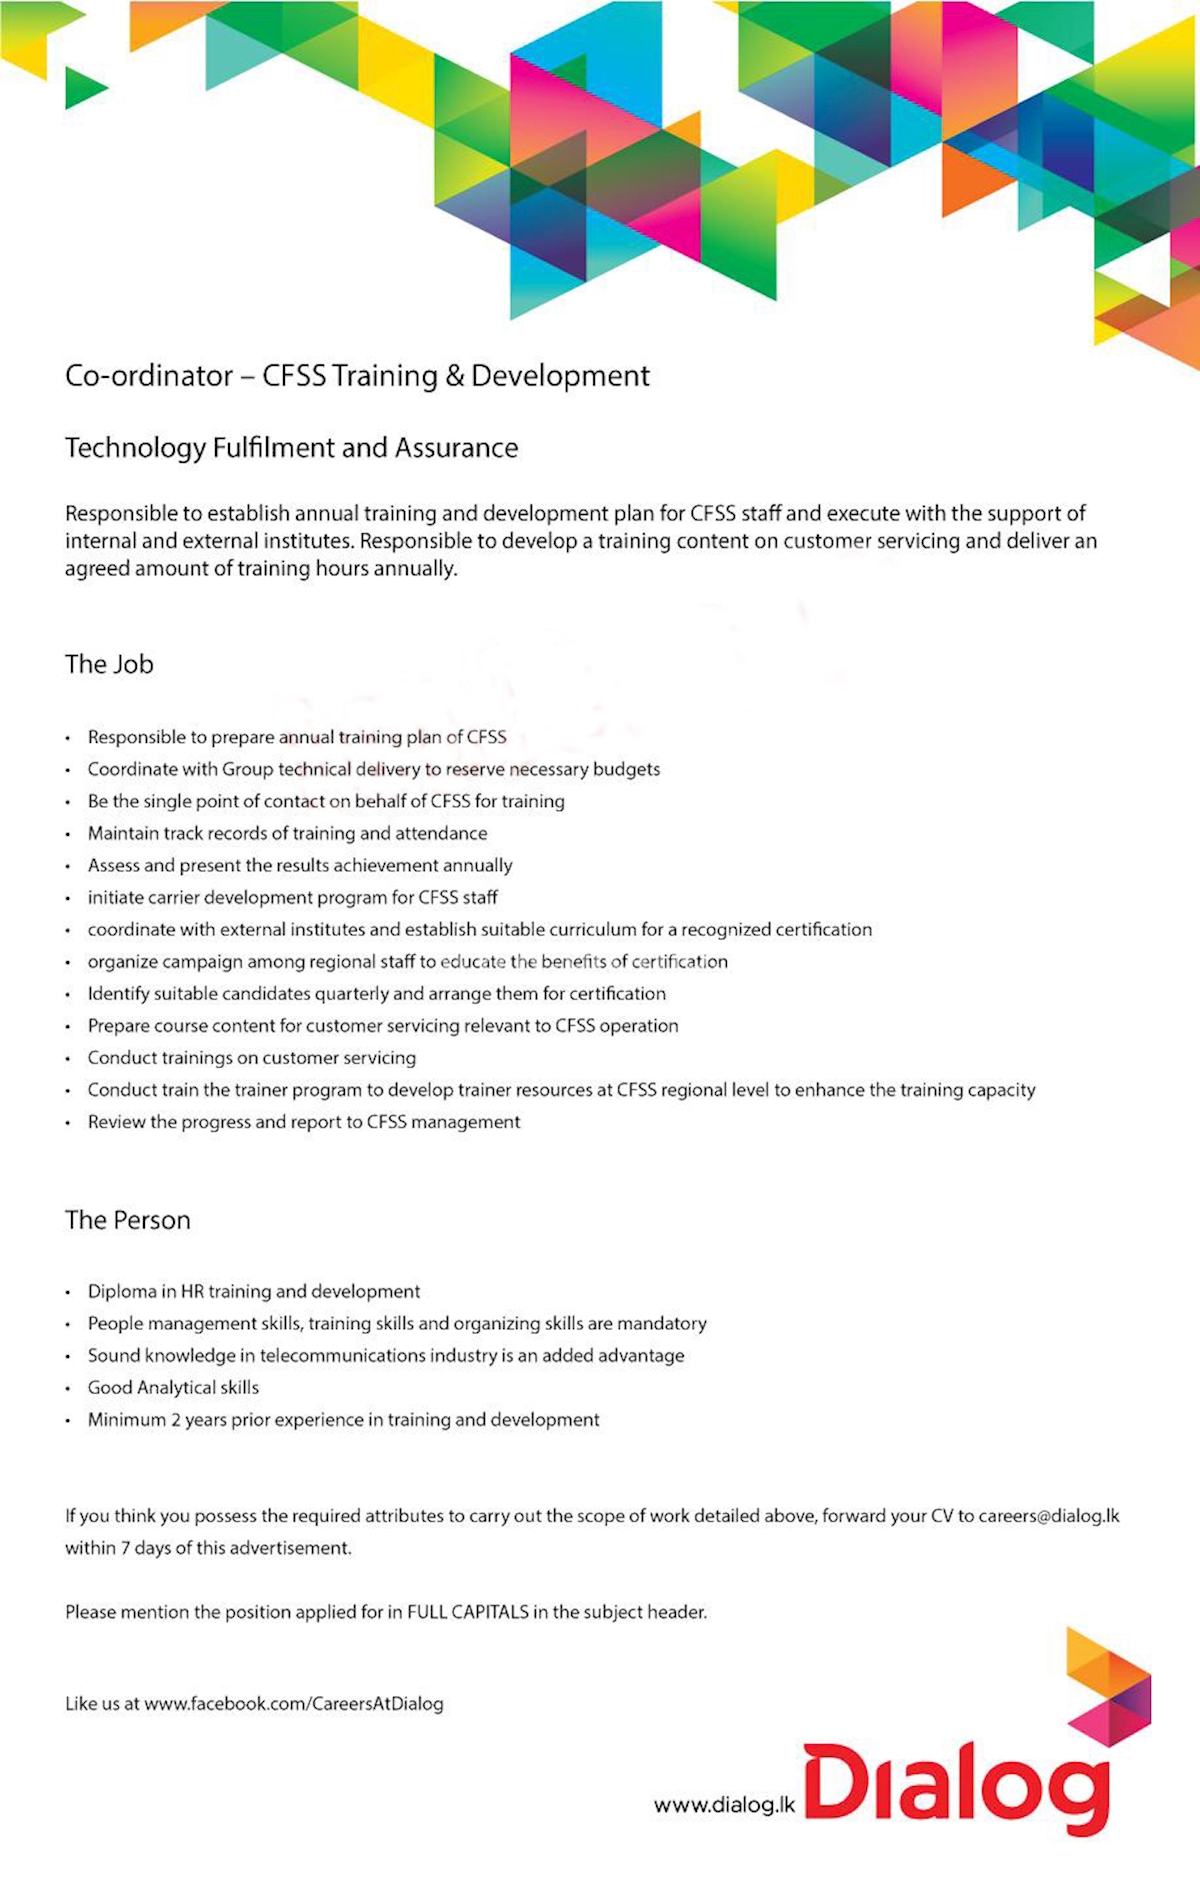 Co-Ordinator - CFSS Training and Development 